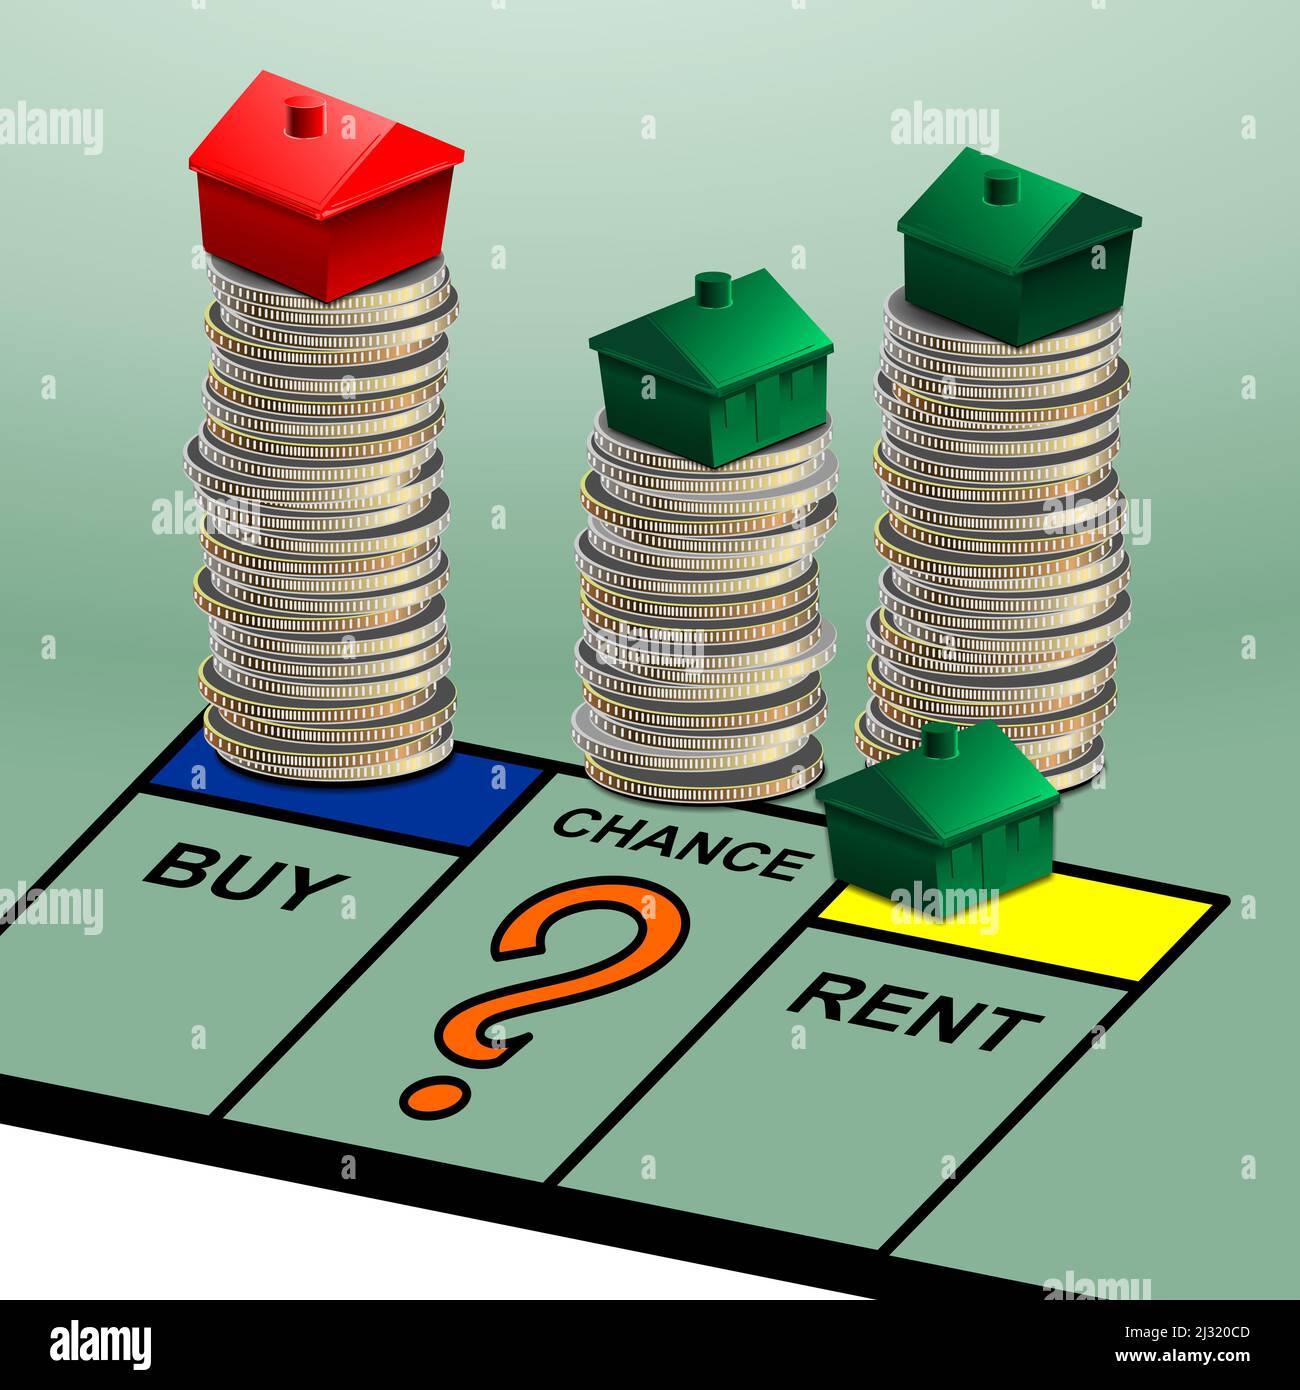 Housing Market buying or renting Stock Photo